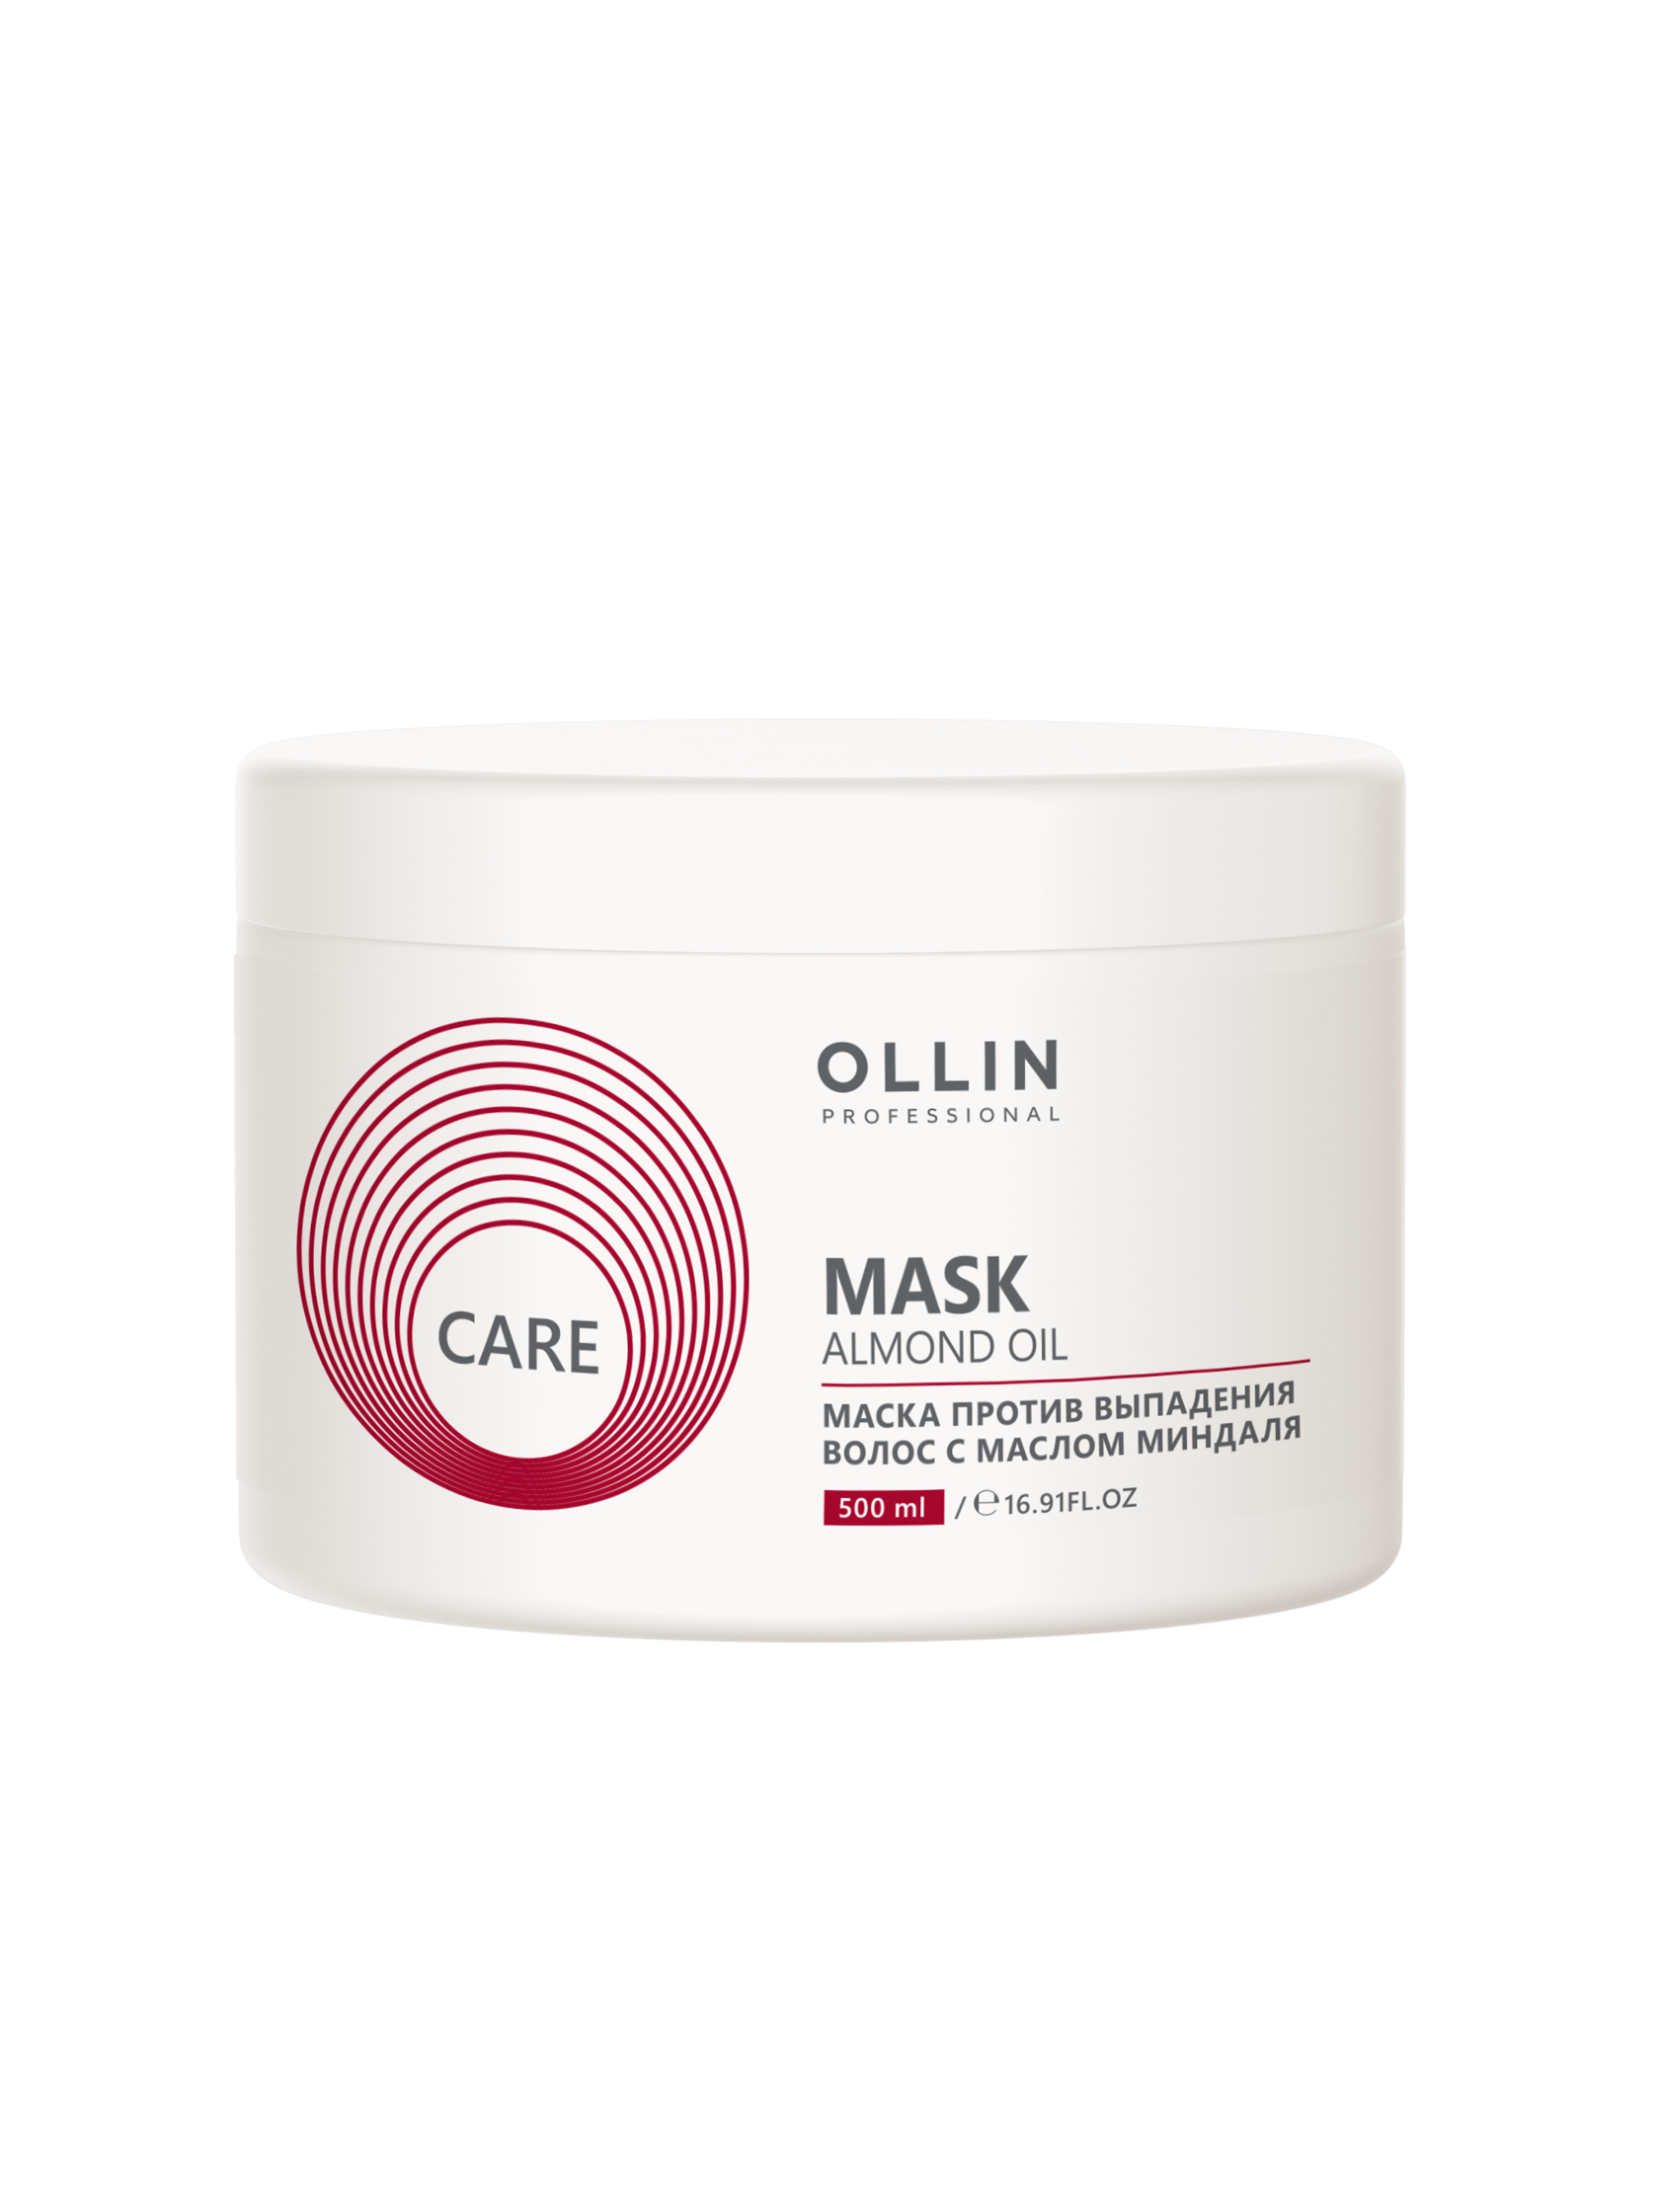 OLLIN CARE Маска для волос с маслом миндаля 500 мл / Almond Oil Mask 